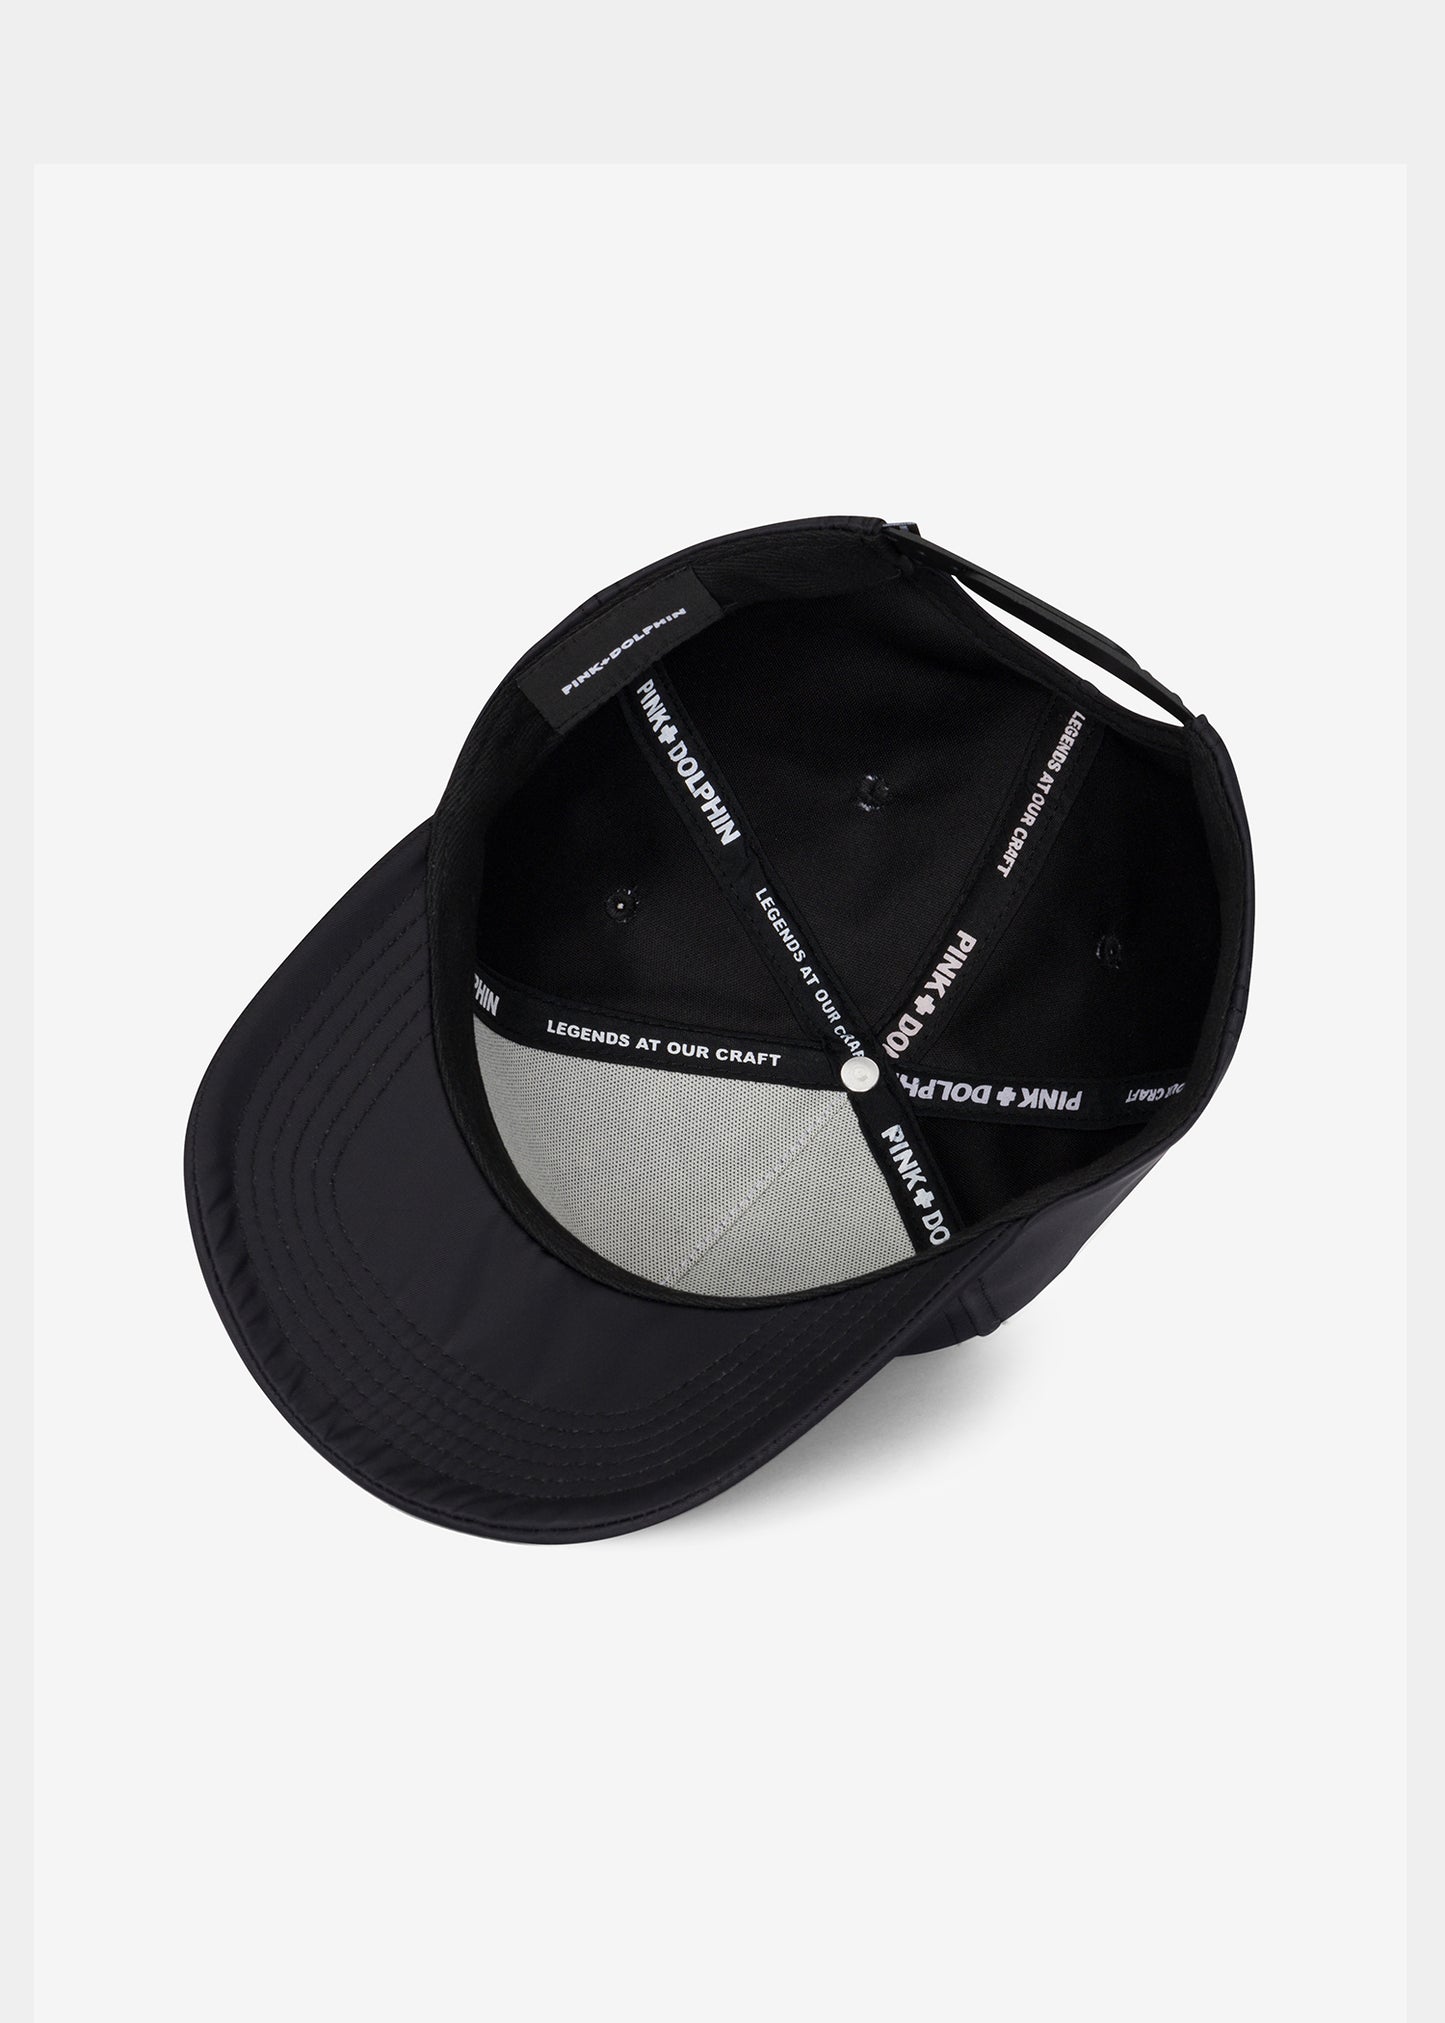 Black Nylon P Hat